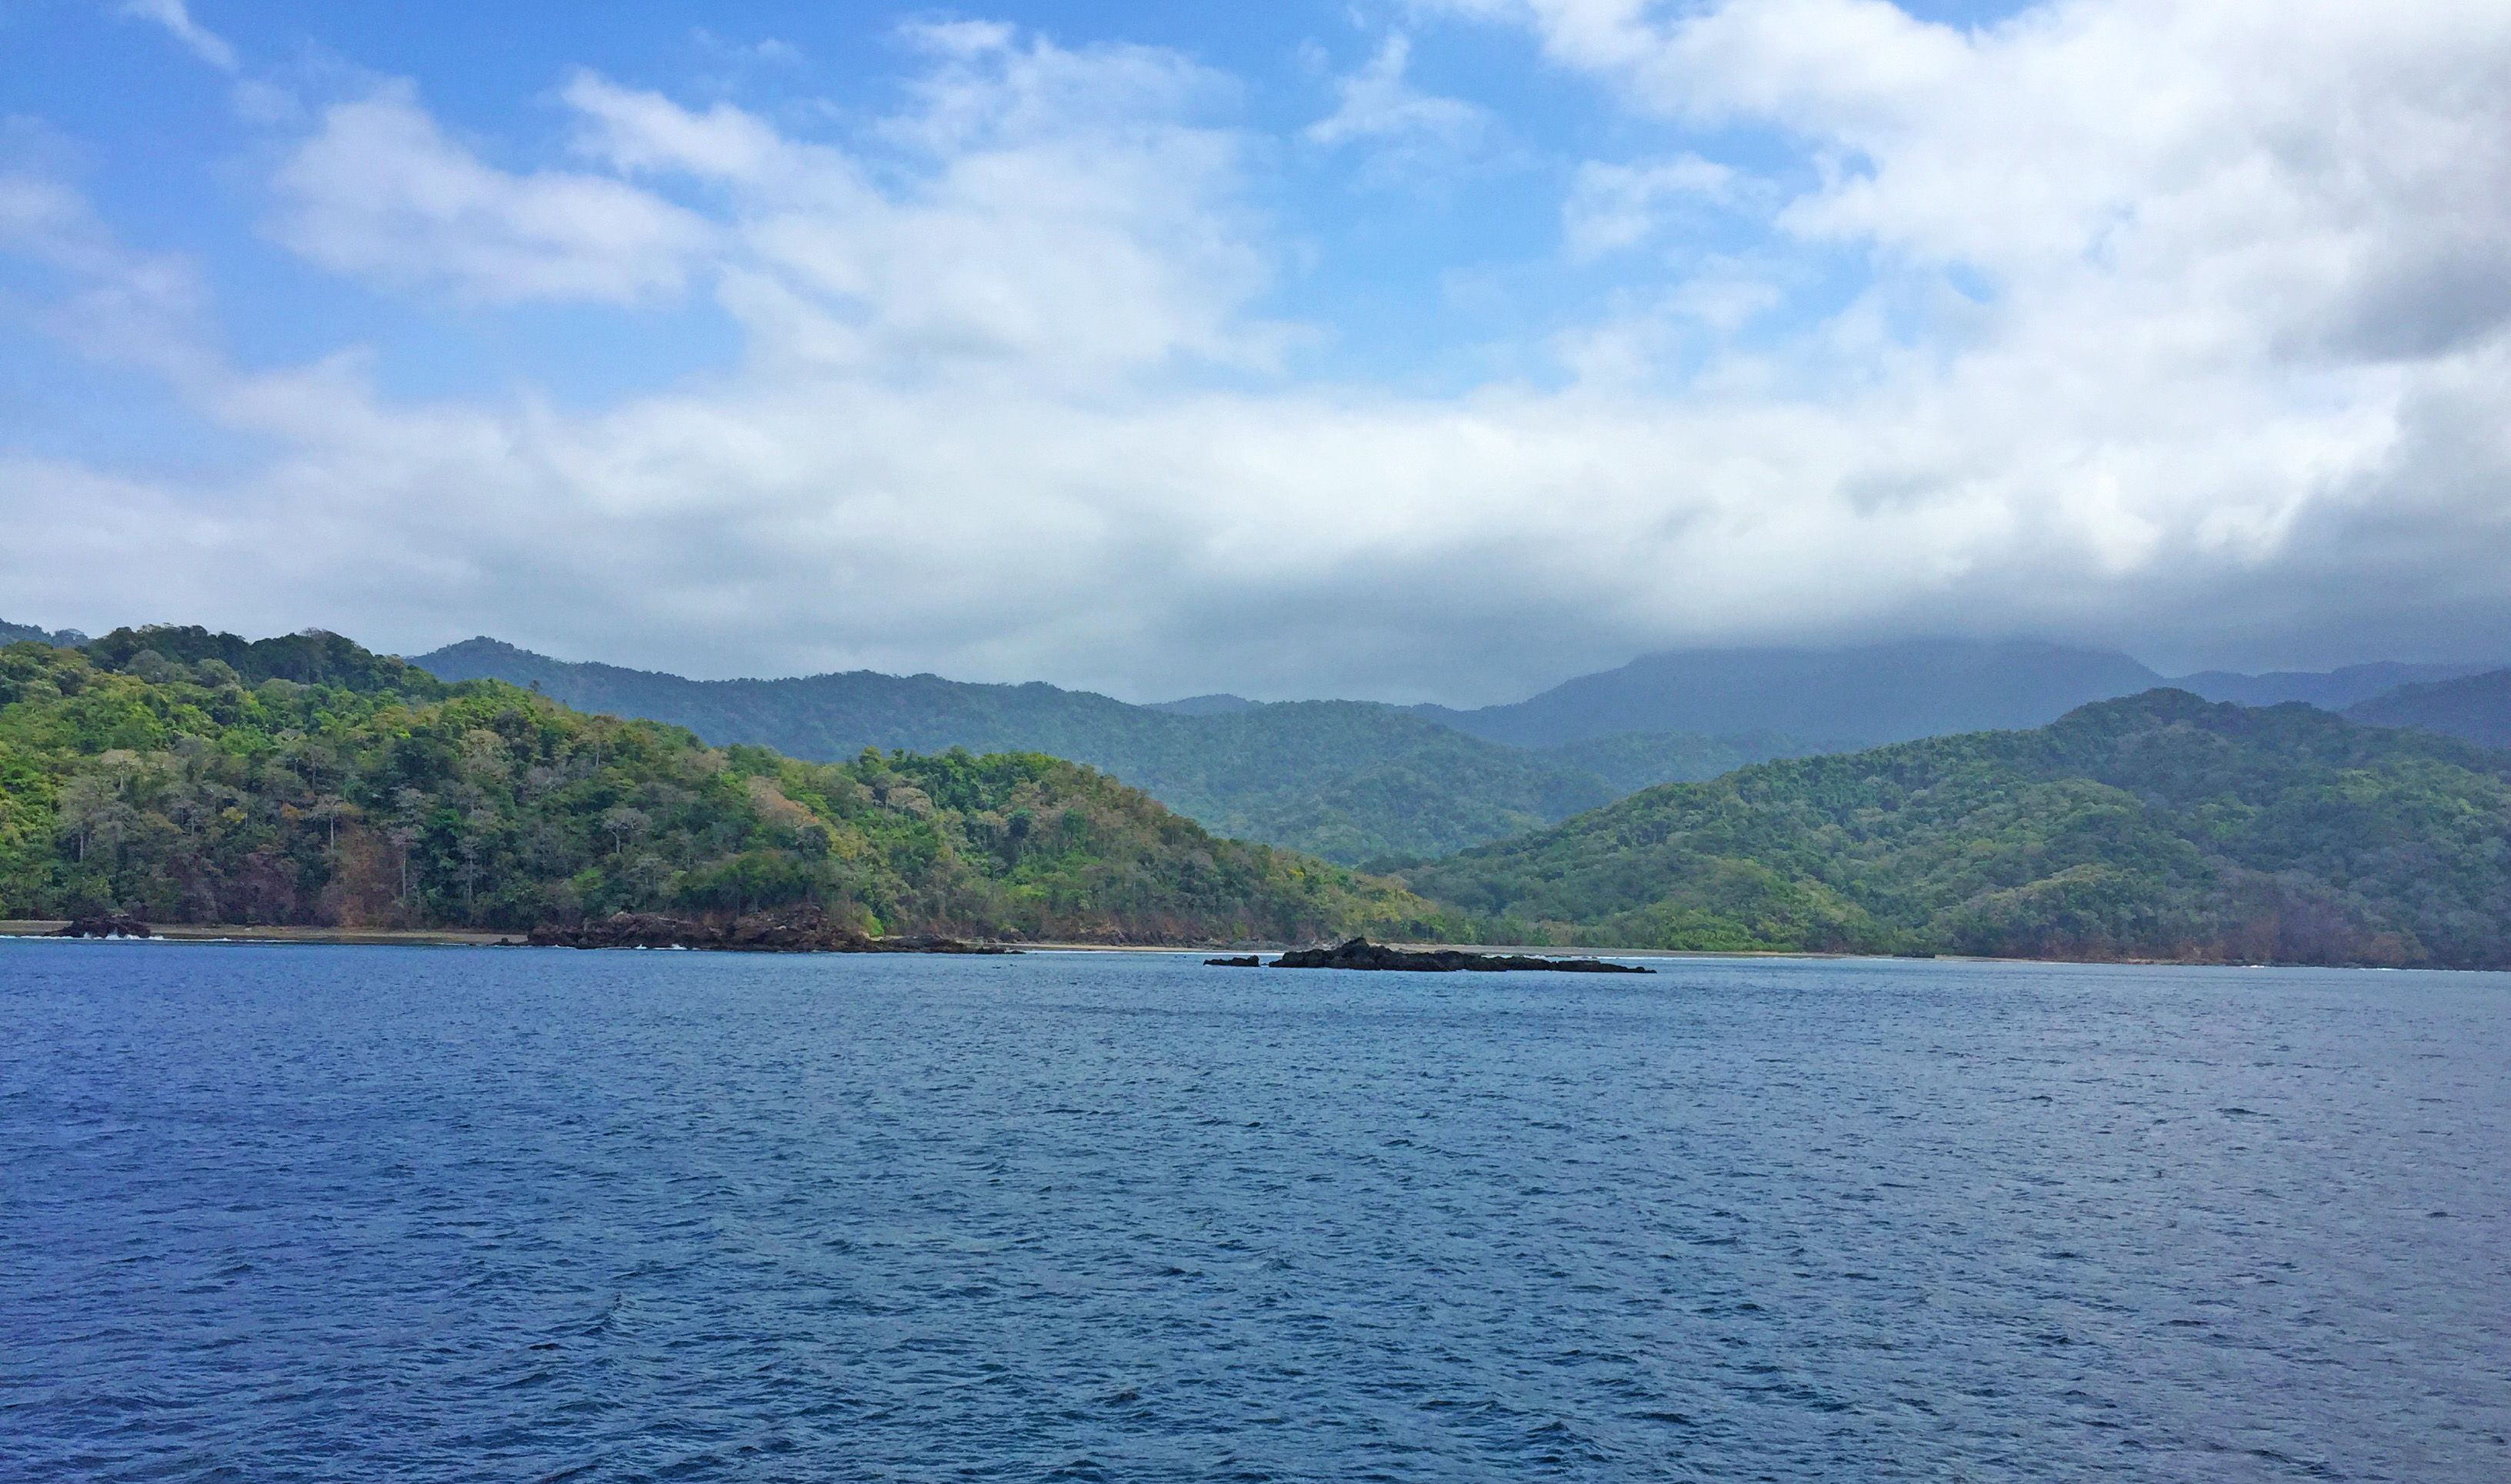 Darien Gap on Pacific Coast. Image by David Broad/Wikimedia Commons. Panama, 2016.